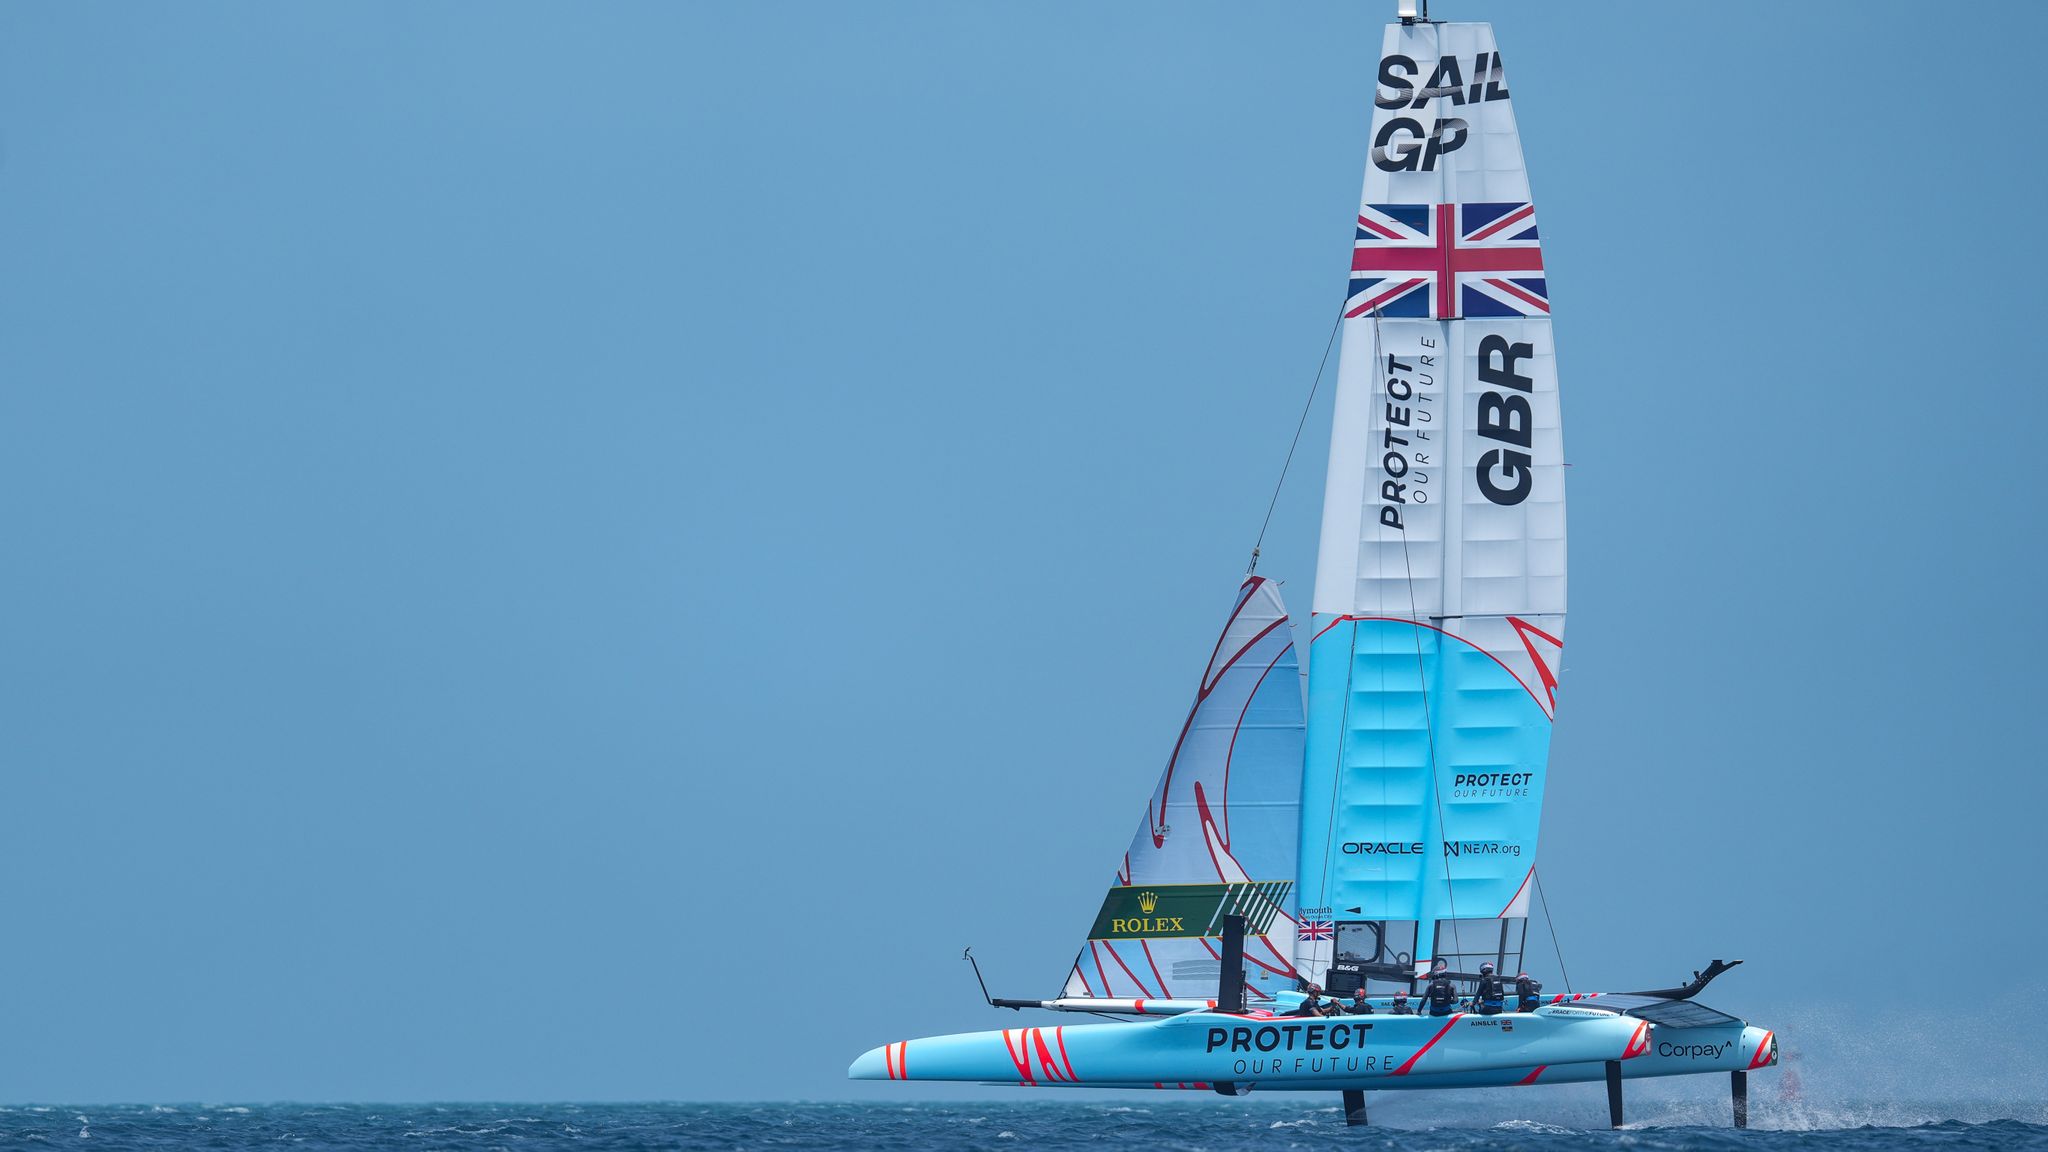 SailGP returns for Season 3 as Sir Ben Ainslie and the British team focus on consistency Sailing News Sky Sports